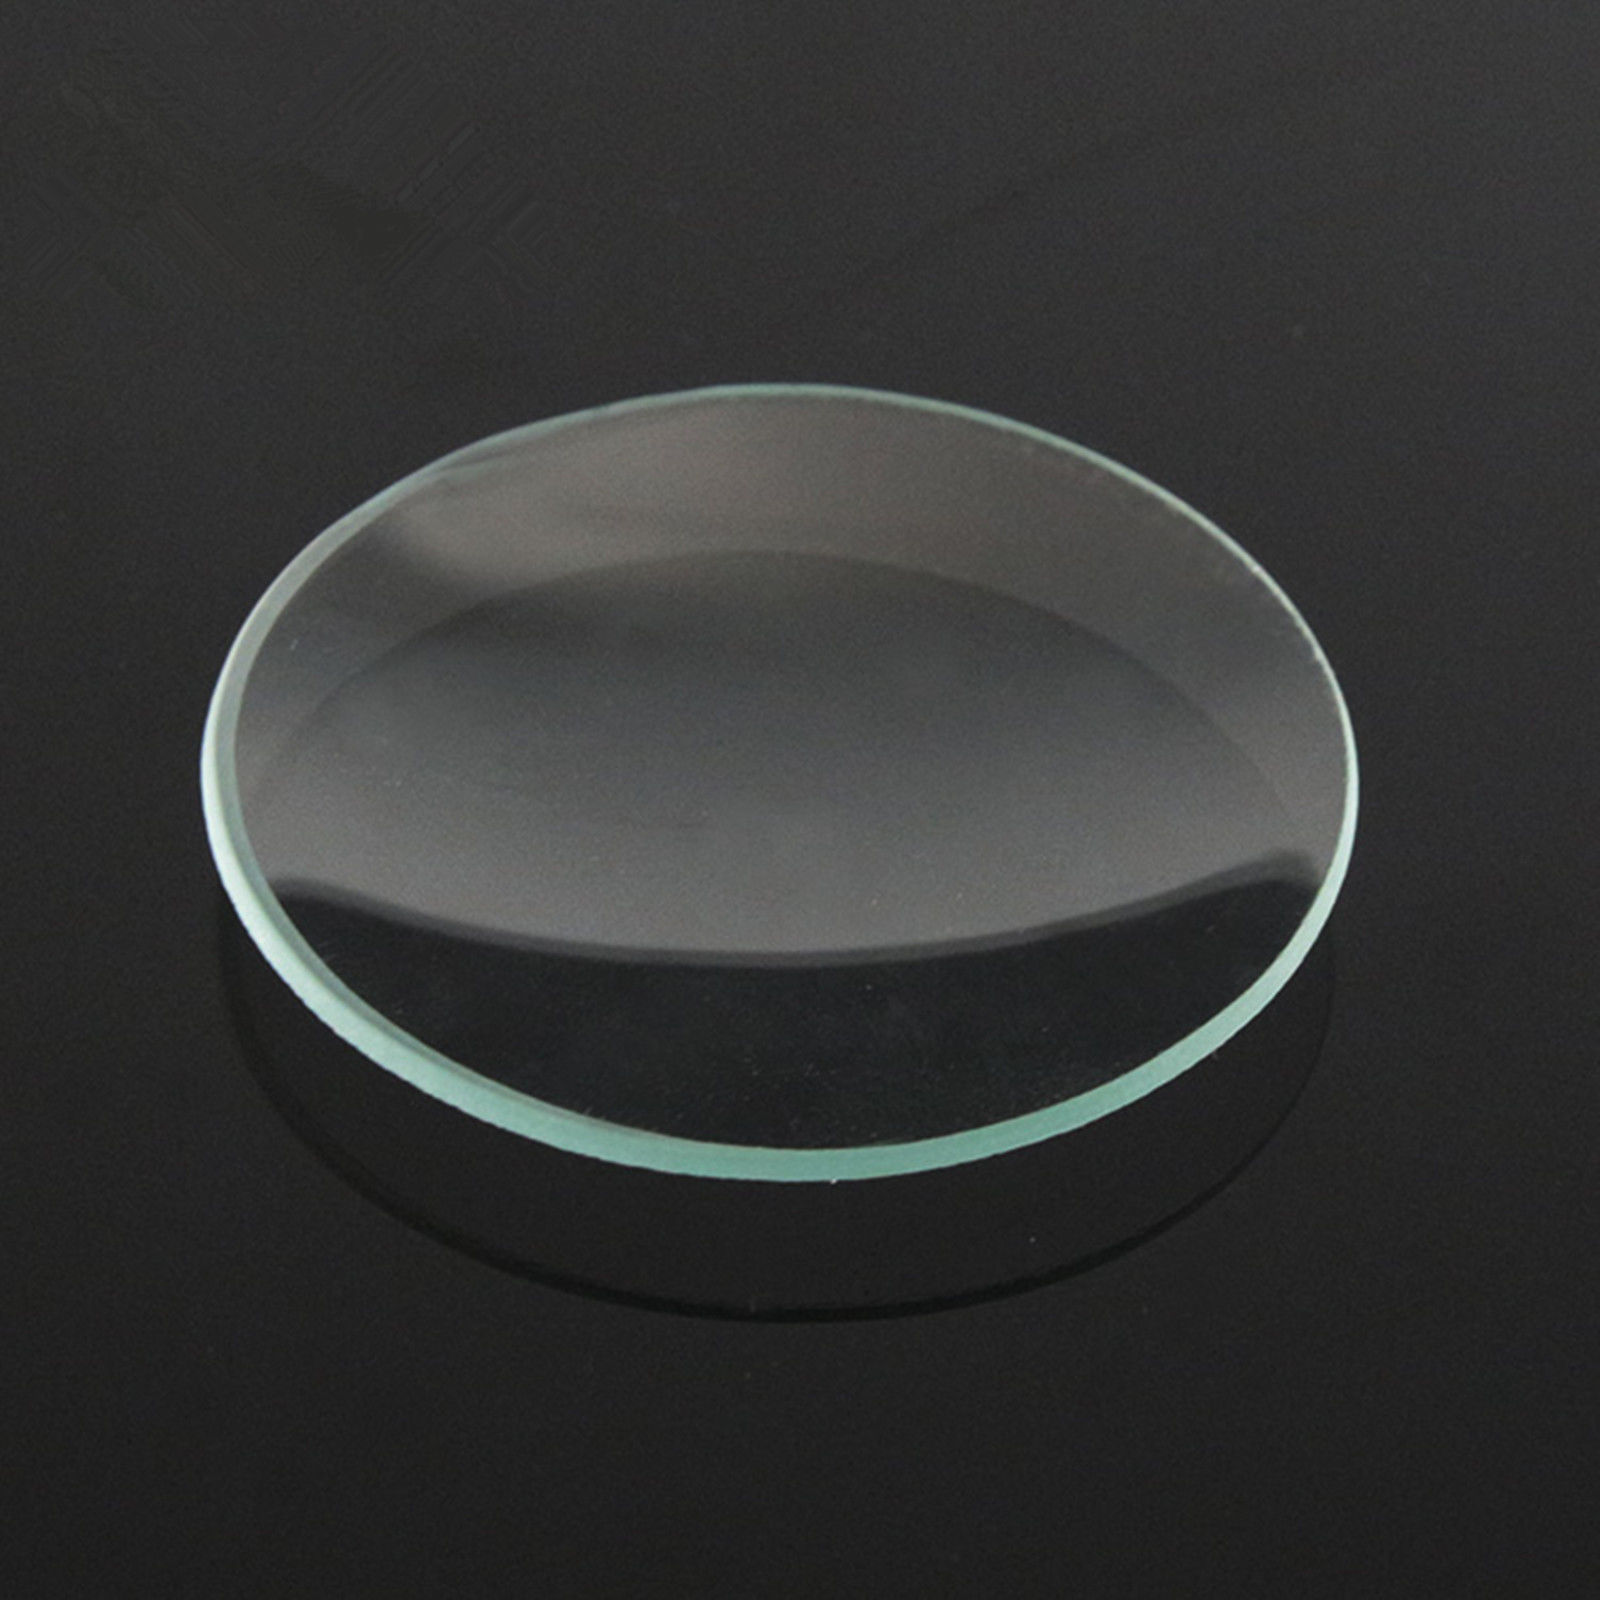 90mm, laboratorie ur glas skål, overflade disk, ydre diameter 9cm,10 stk / parti